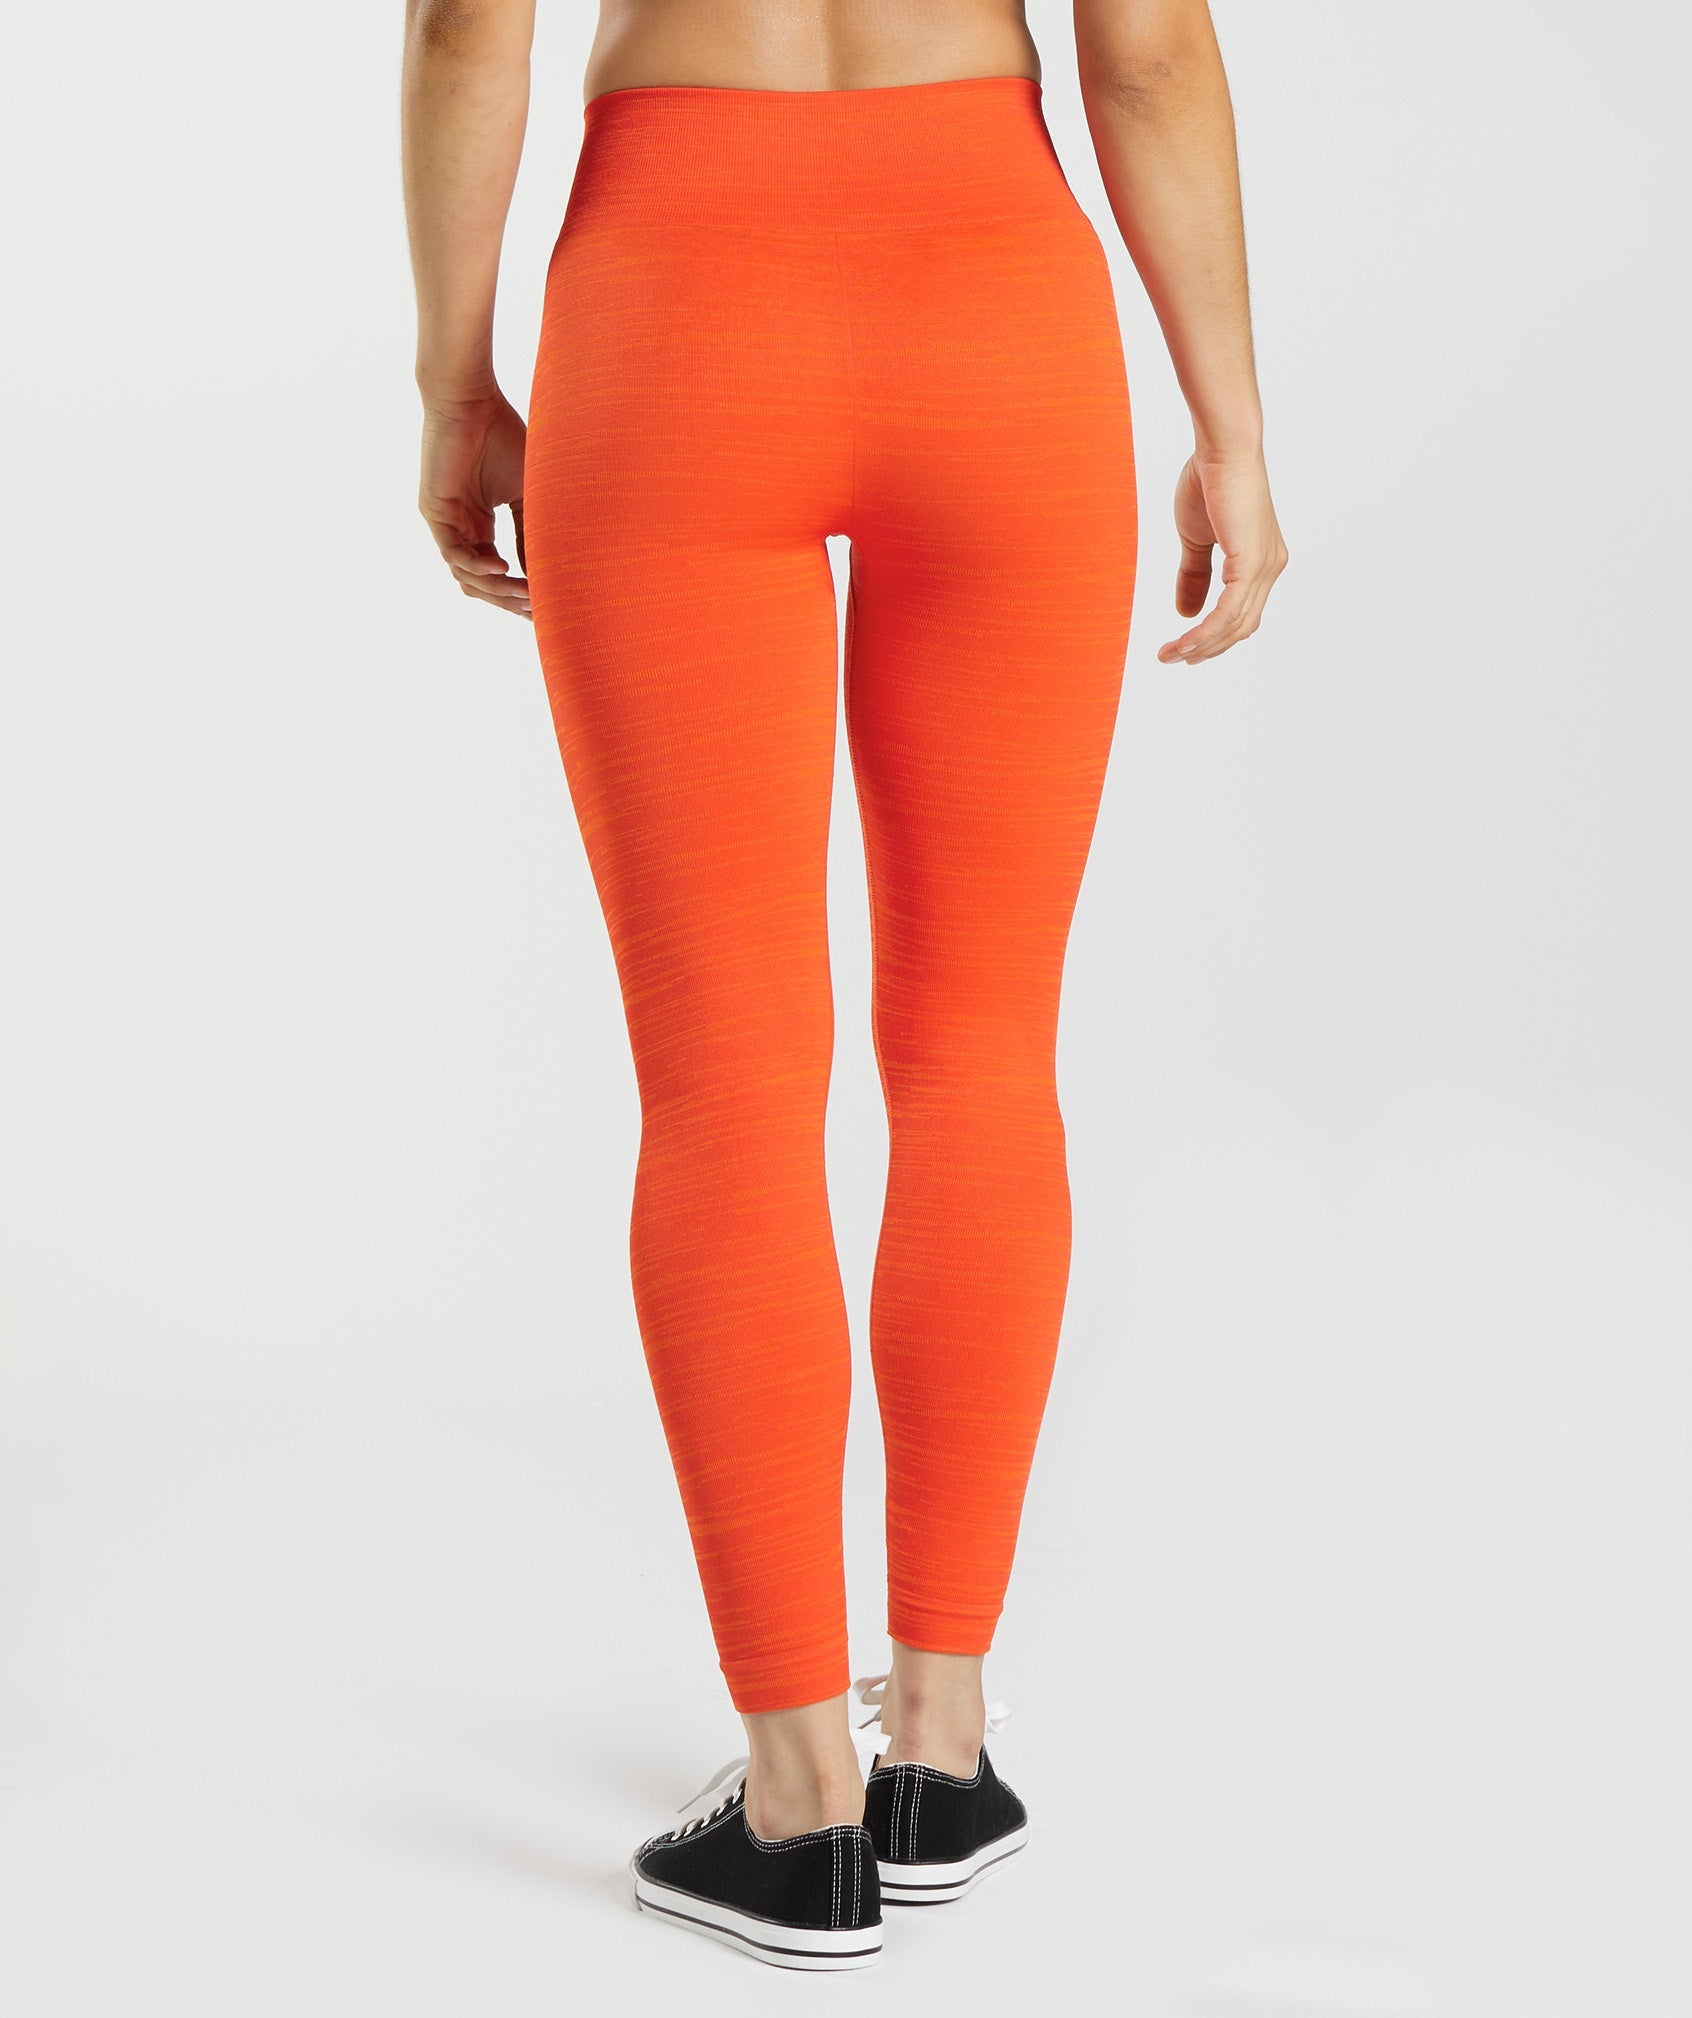 Asos 4505 orange leggings - Gem